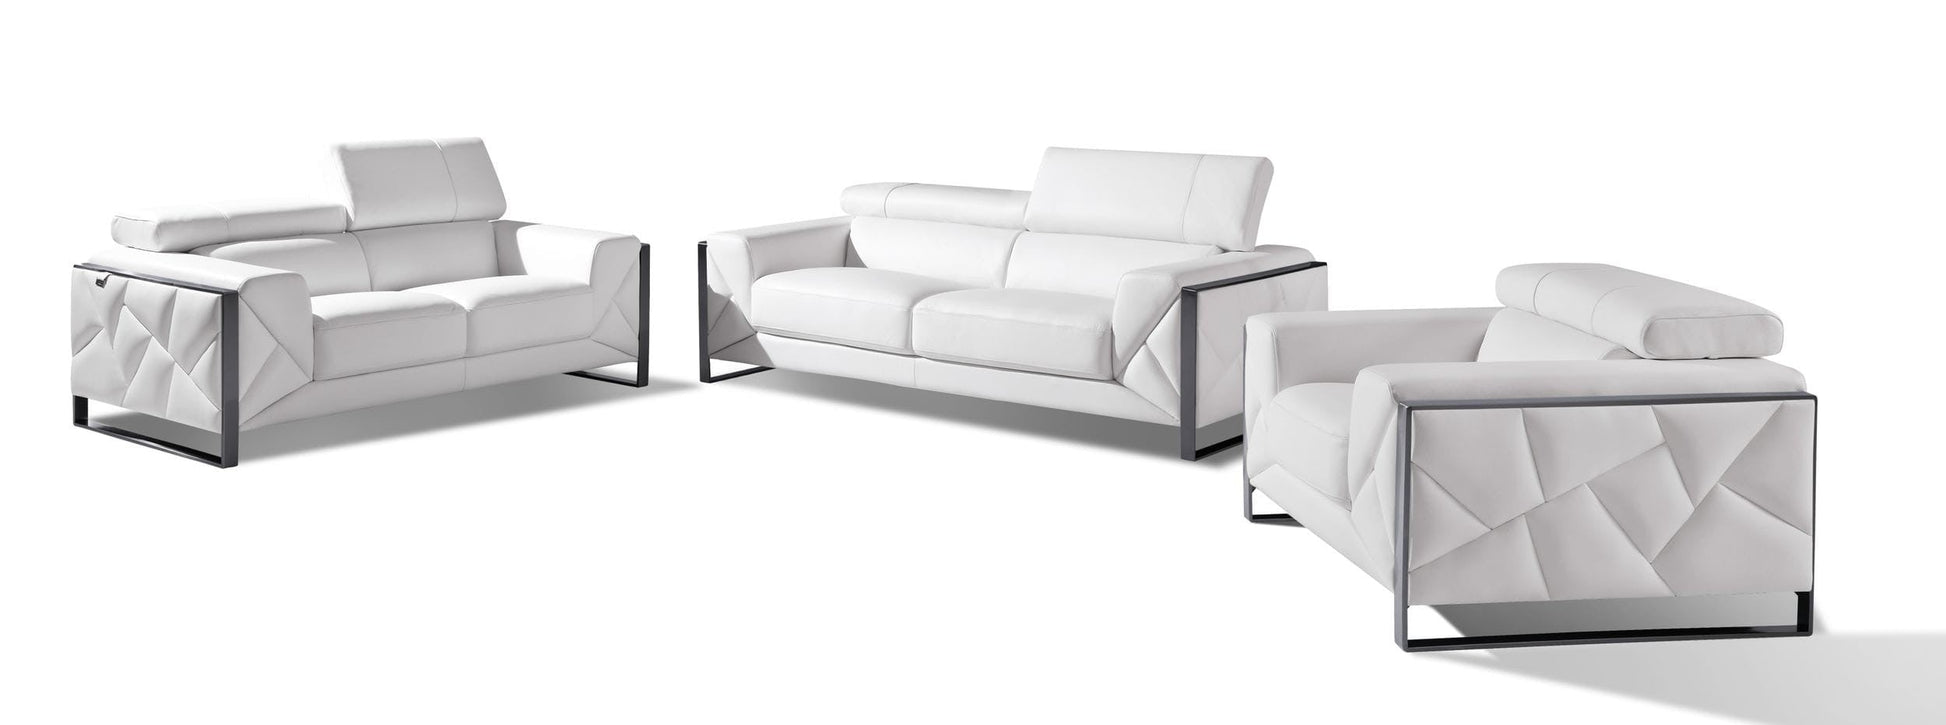 by Global United Sofa 3PC Set - Sofa | Loveseat | Armchair / White Global United 903 - Divanitalia 3PC Sofa Set